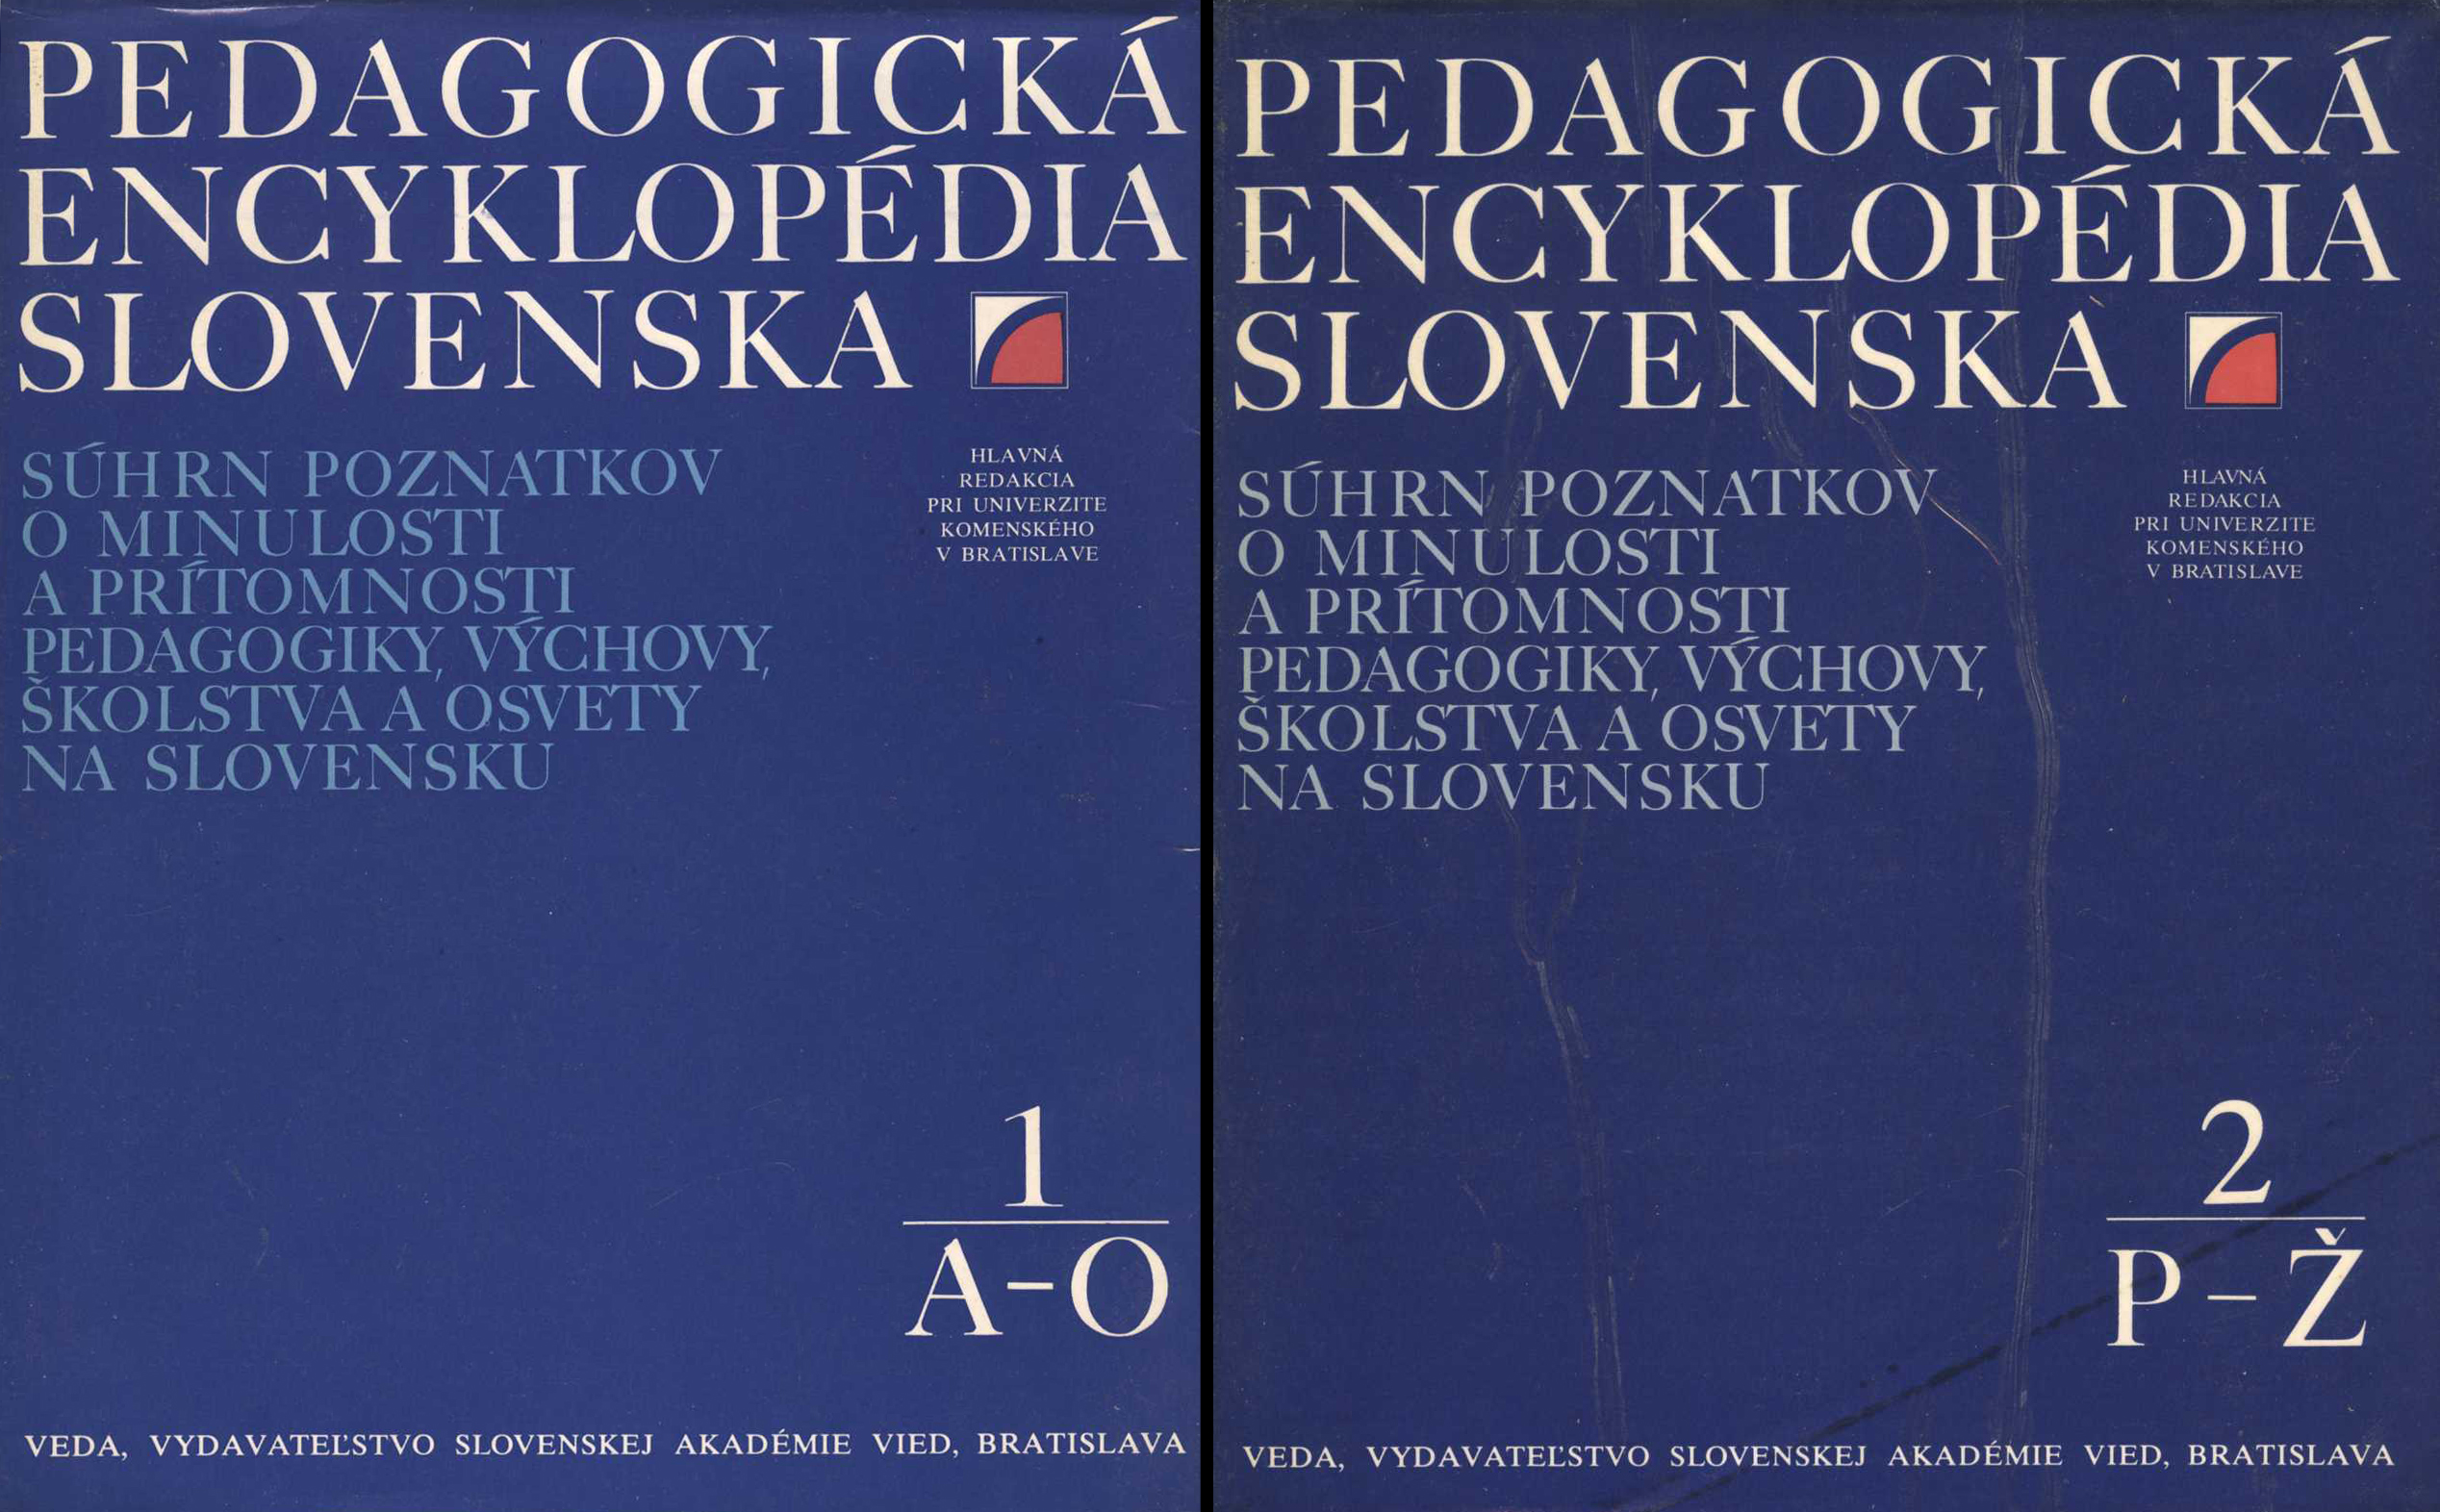 Pedagogická encyklopédia Slovenska I. - II.